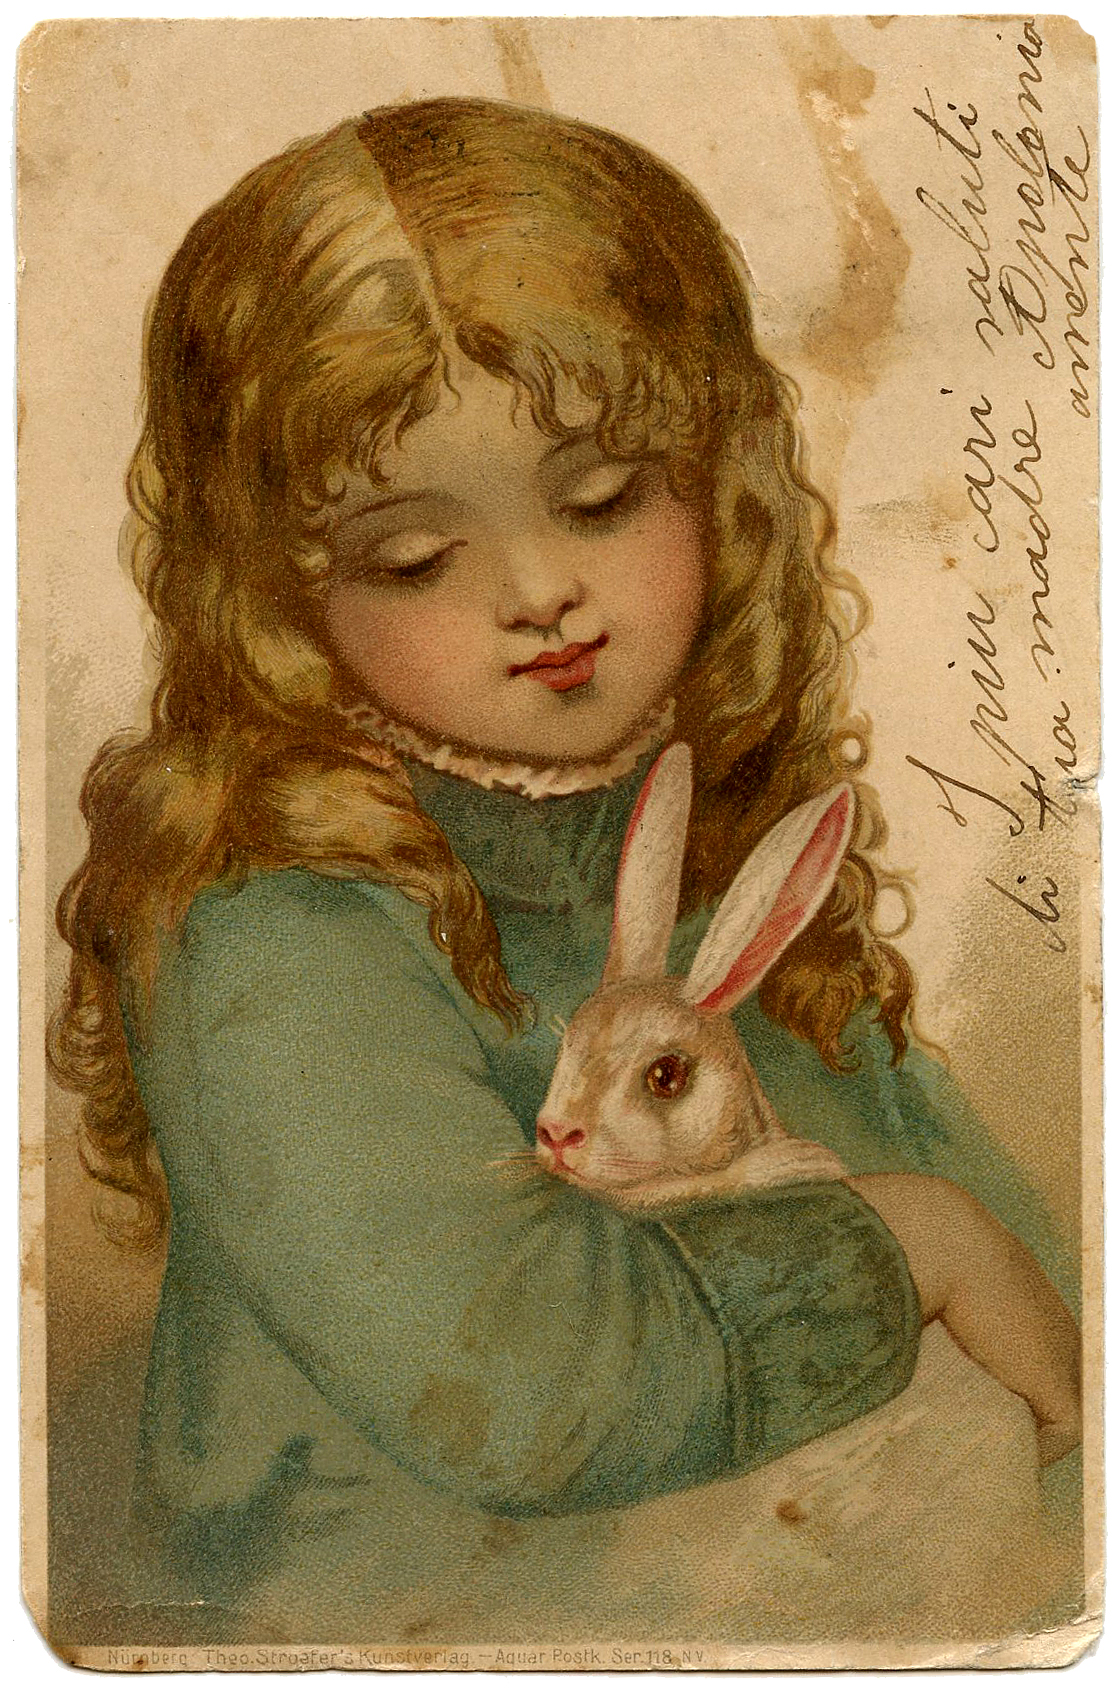 Cute Illustration Postcard, Fairy Rabbit